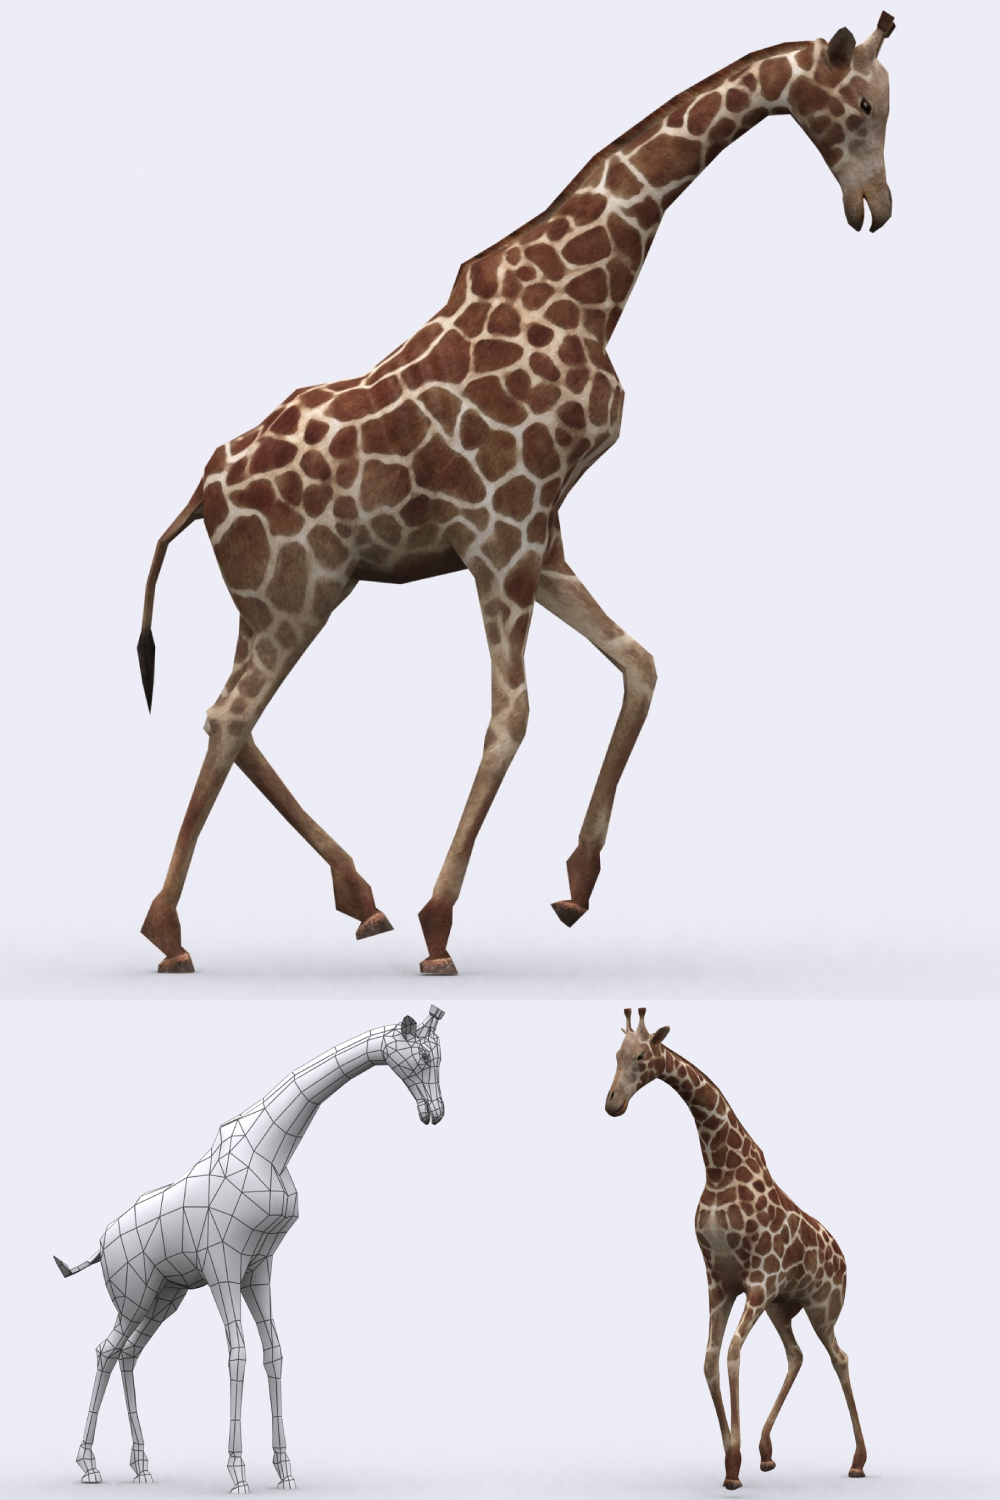 3Drt - Safari animals - Giraffe - Pinterest.